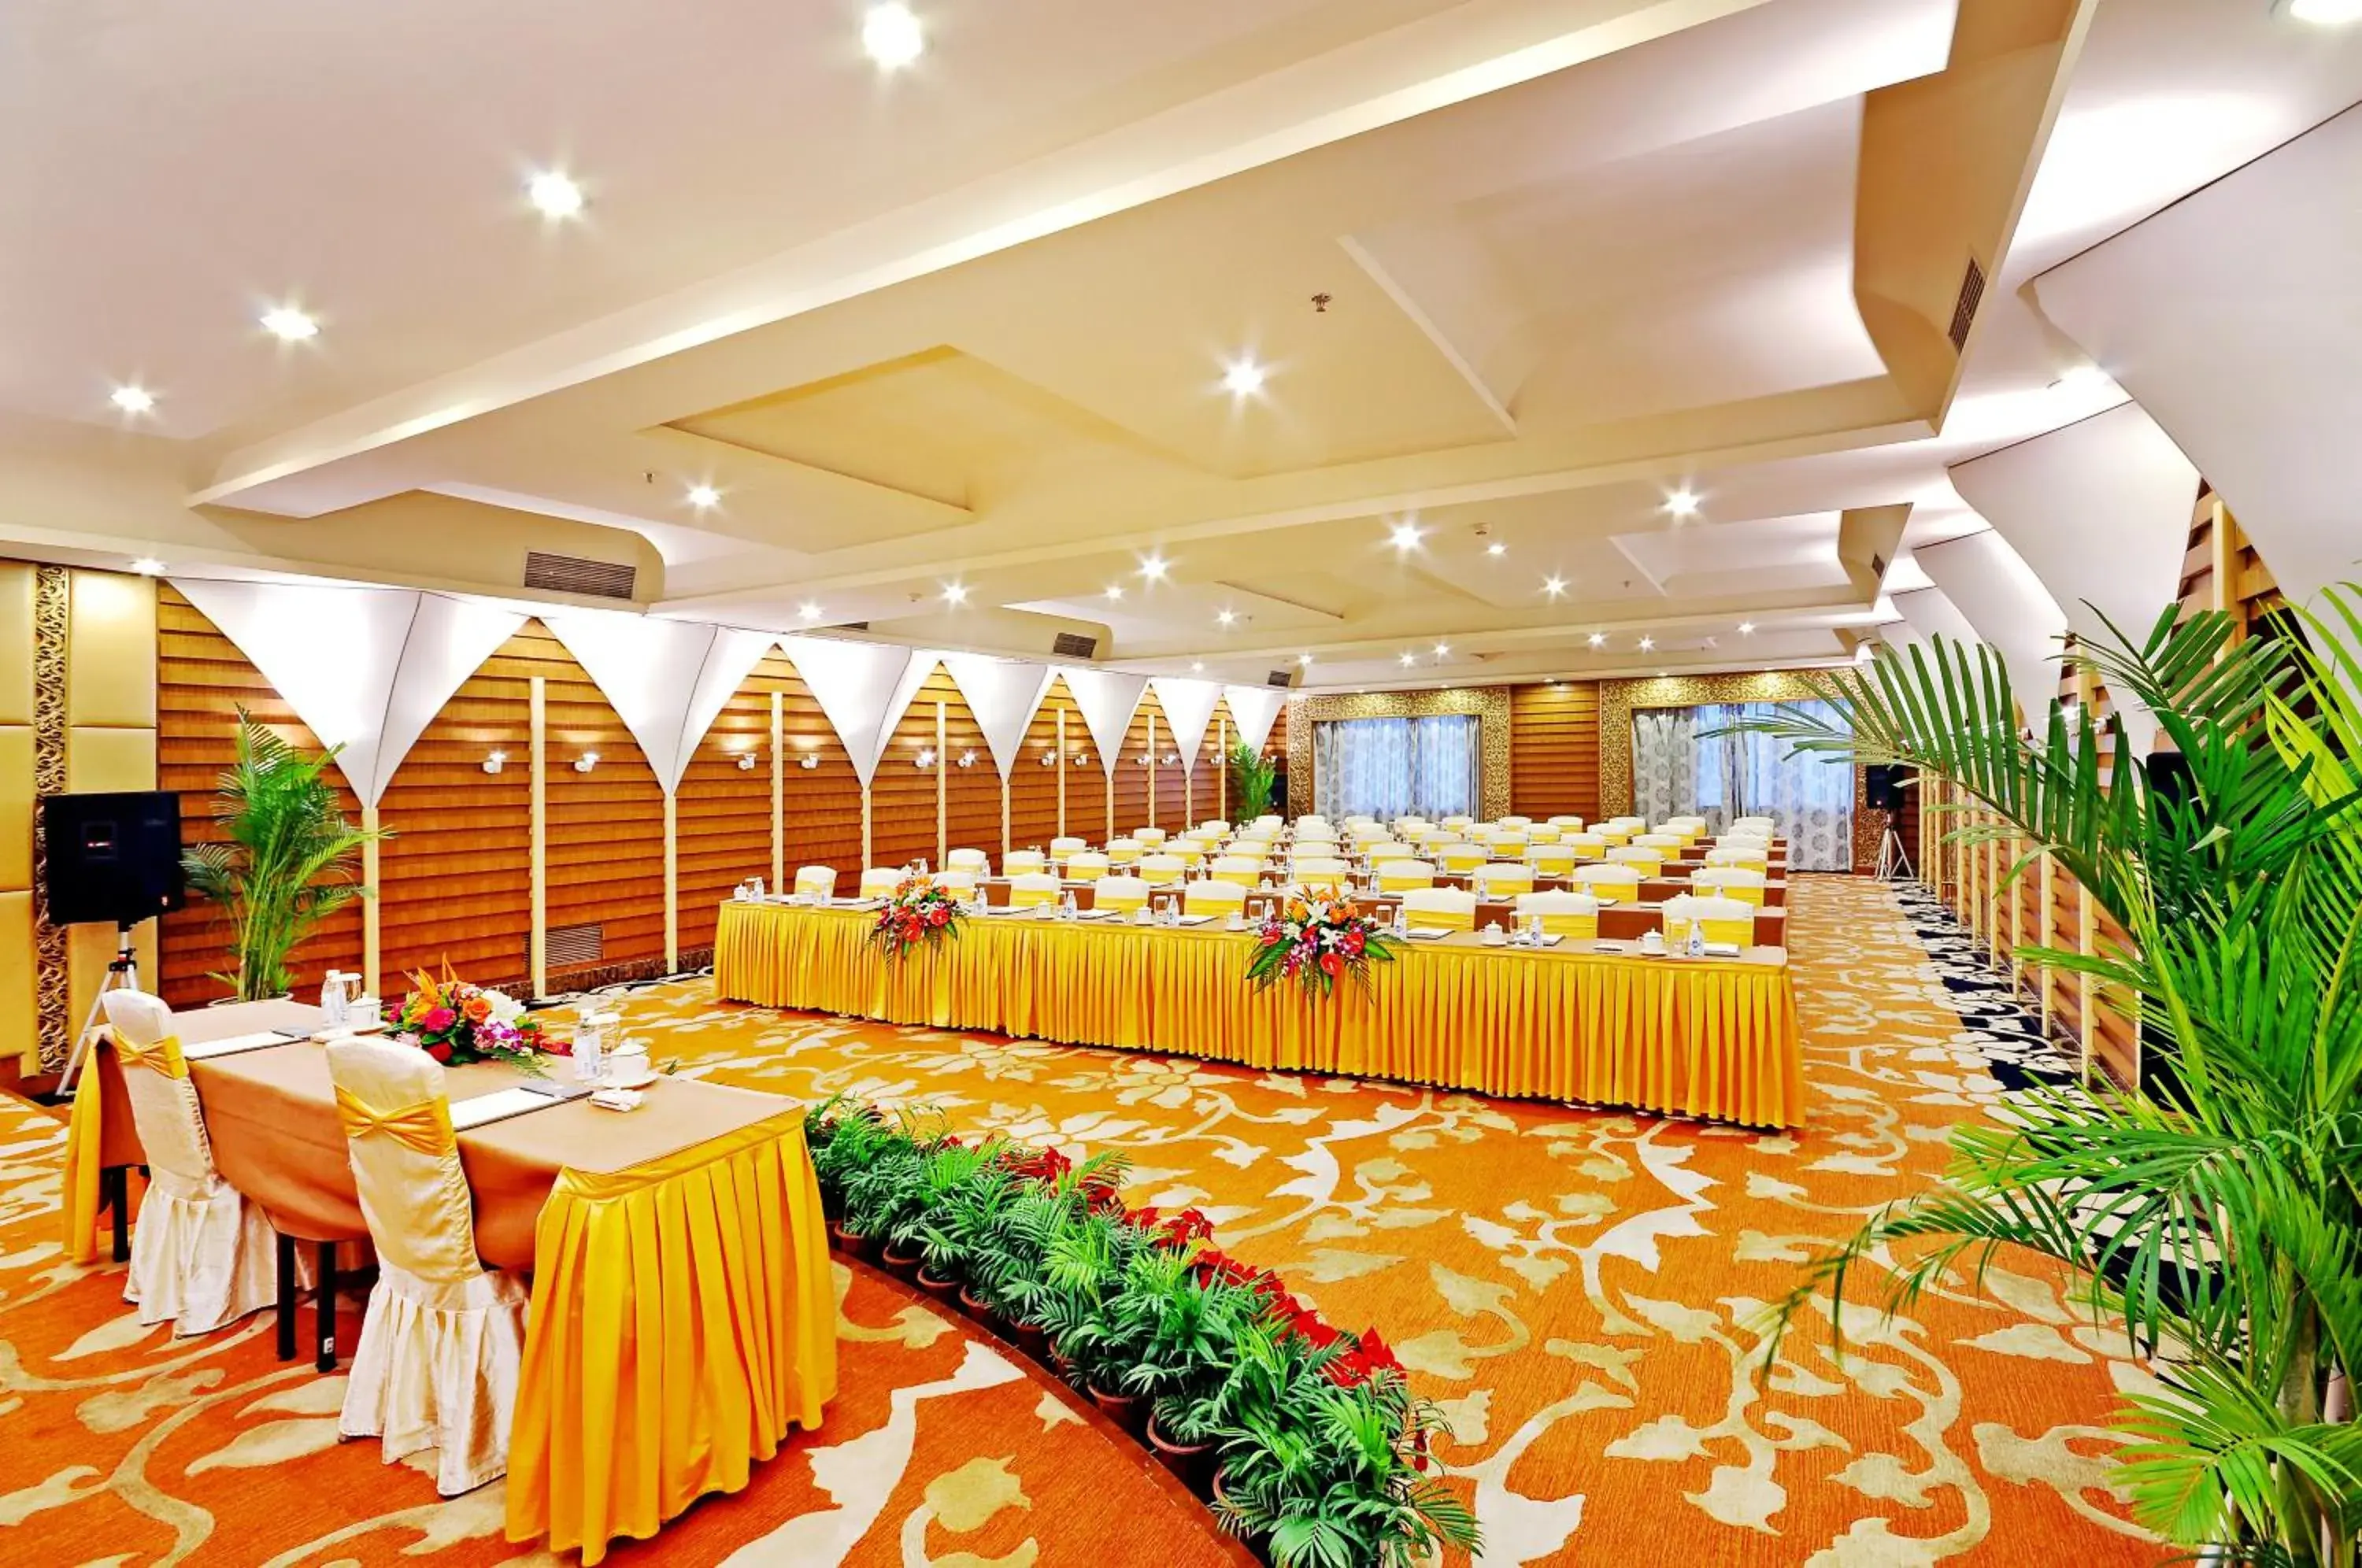 Business facilities, Banquet Facilities in Wangjiang Hotel